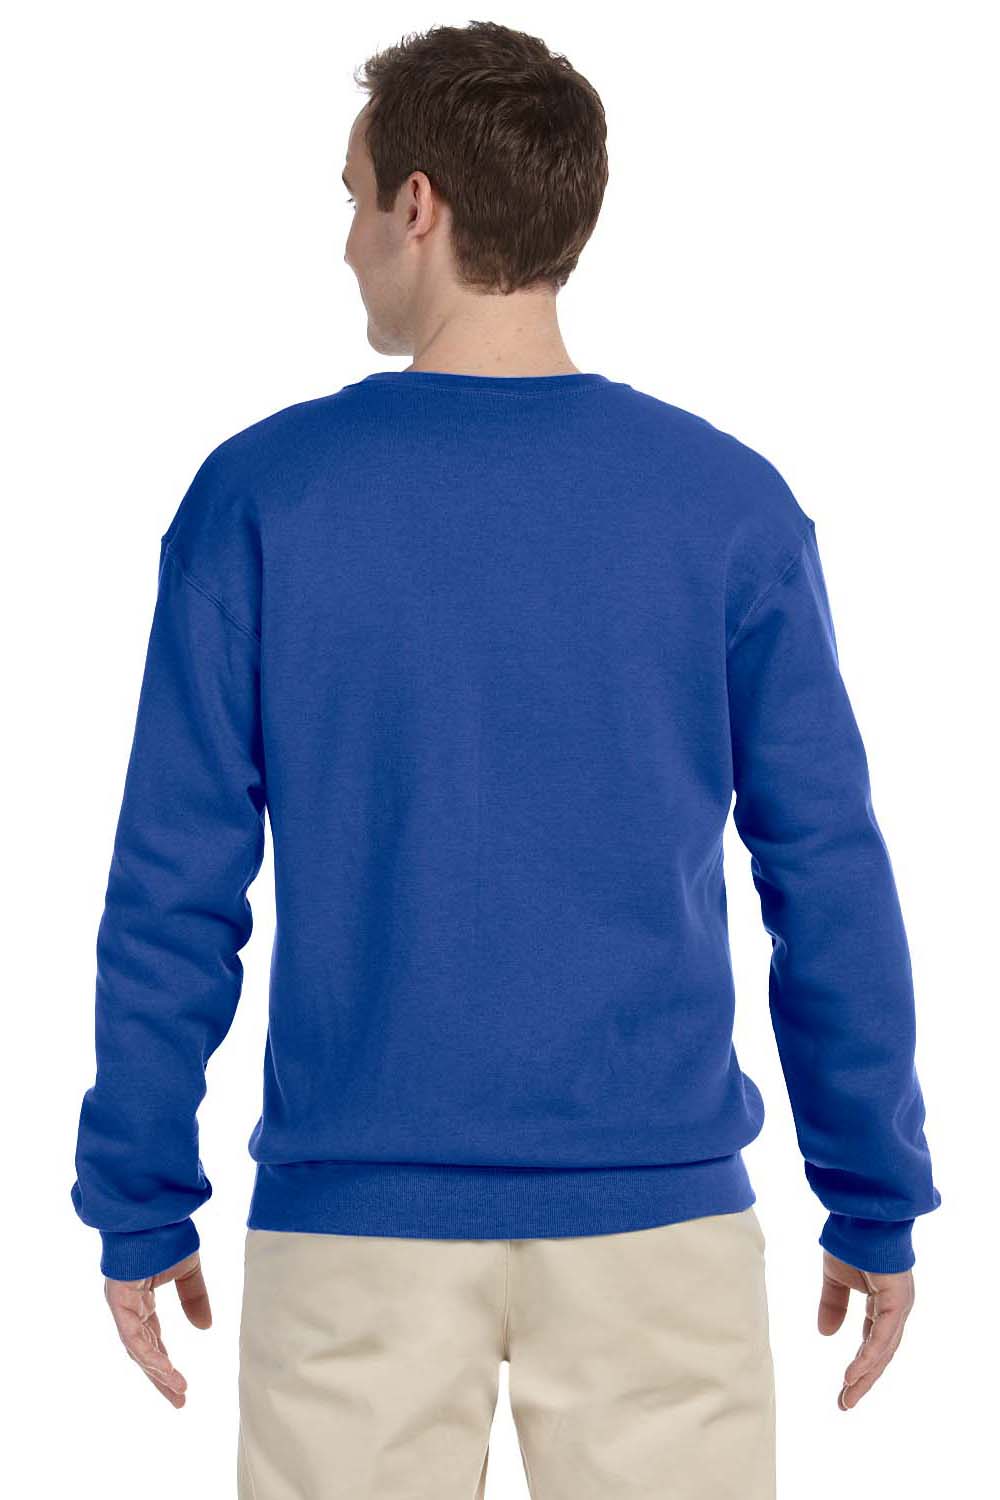 Jerzees 562 Mens NuBlend Fleece Crewneck Sweatshirt Royal Blue Back